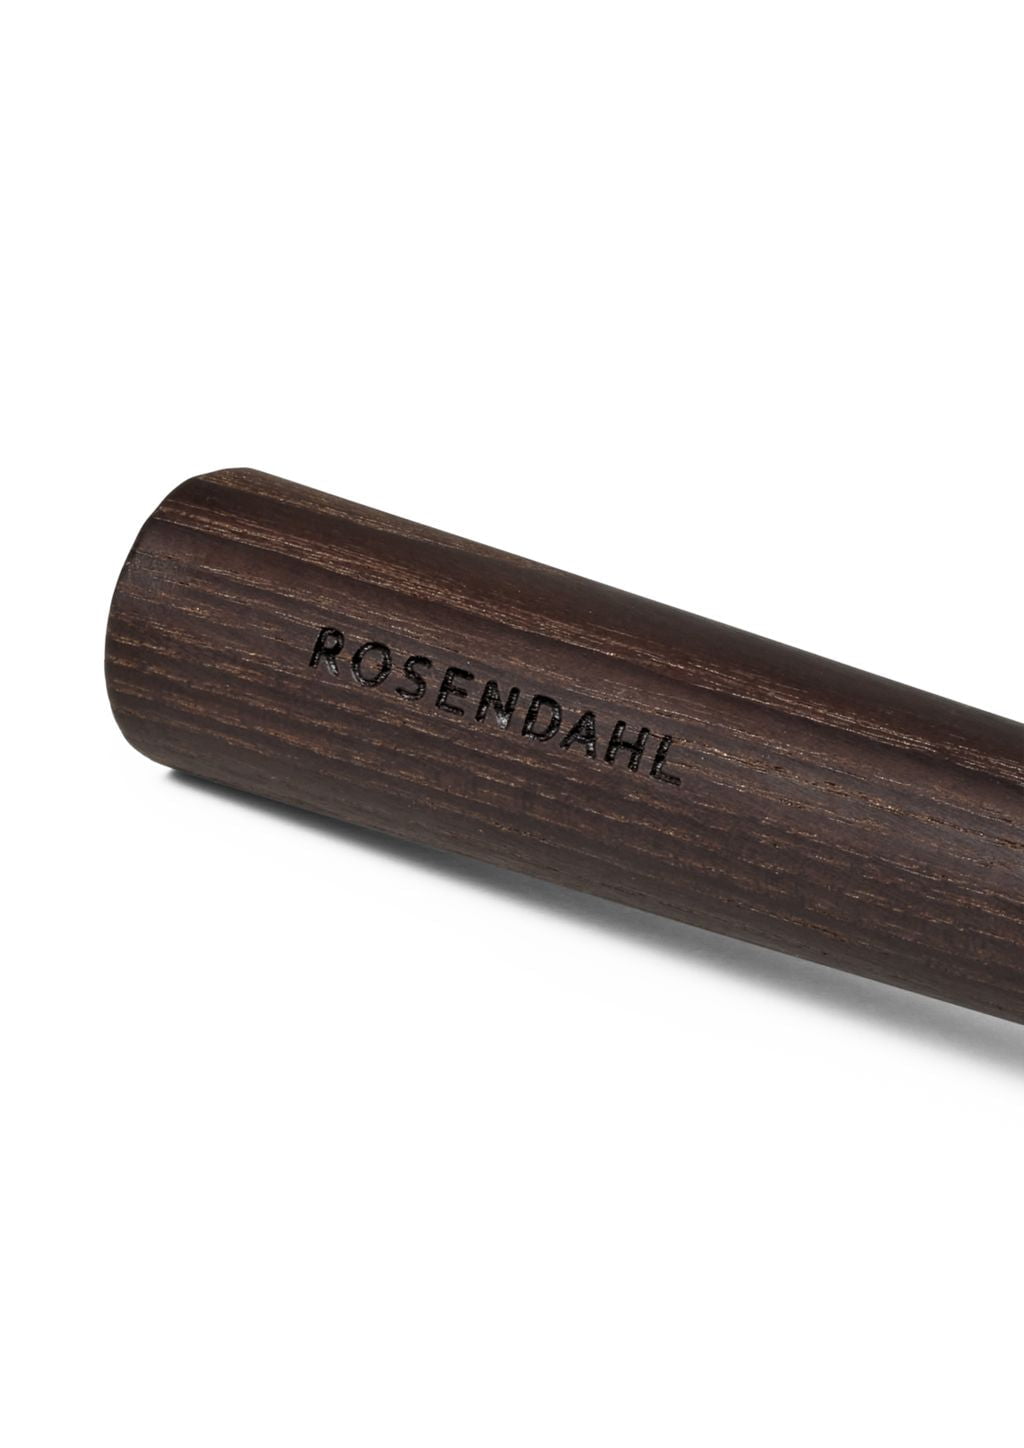 Rosendahl Rå Whisk, Thermo Ash / Gun Metallic